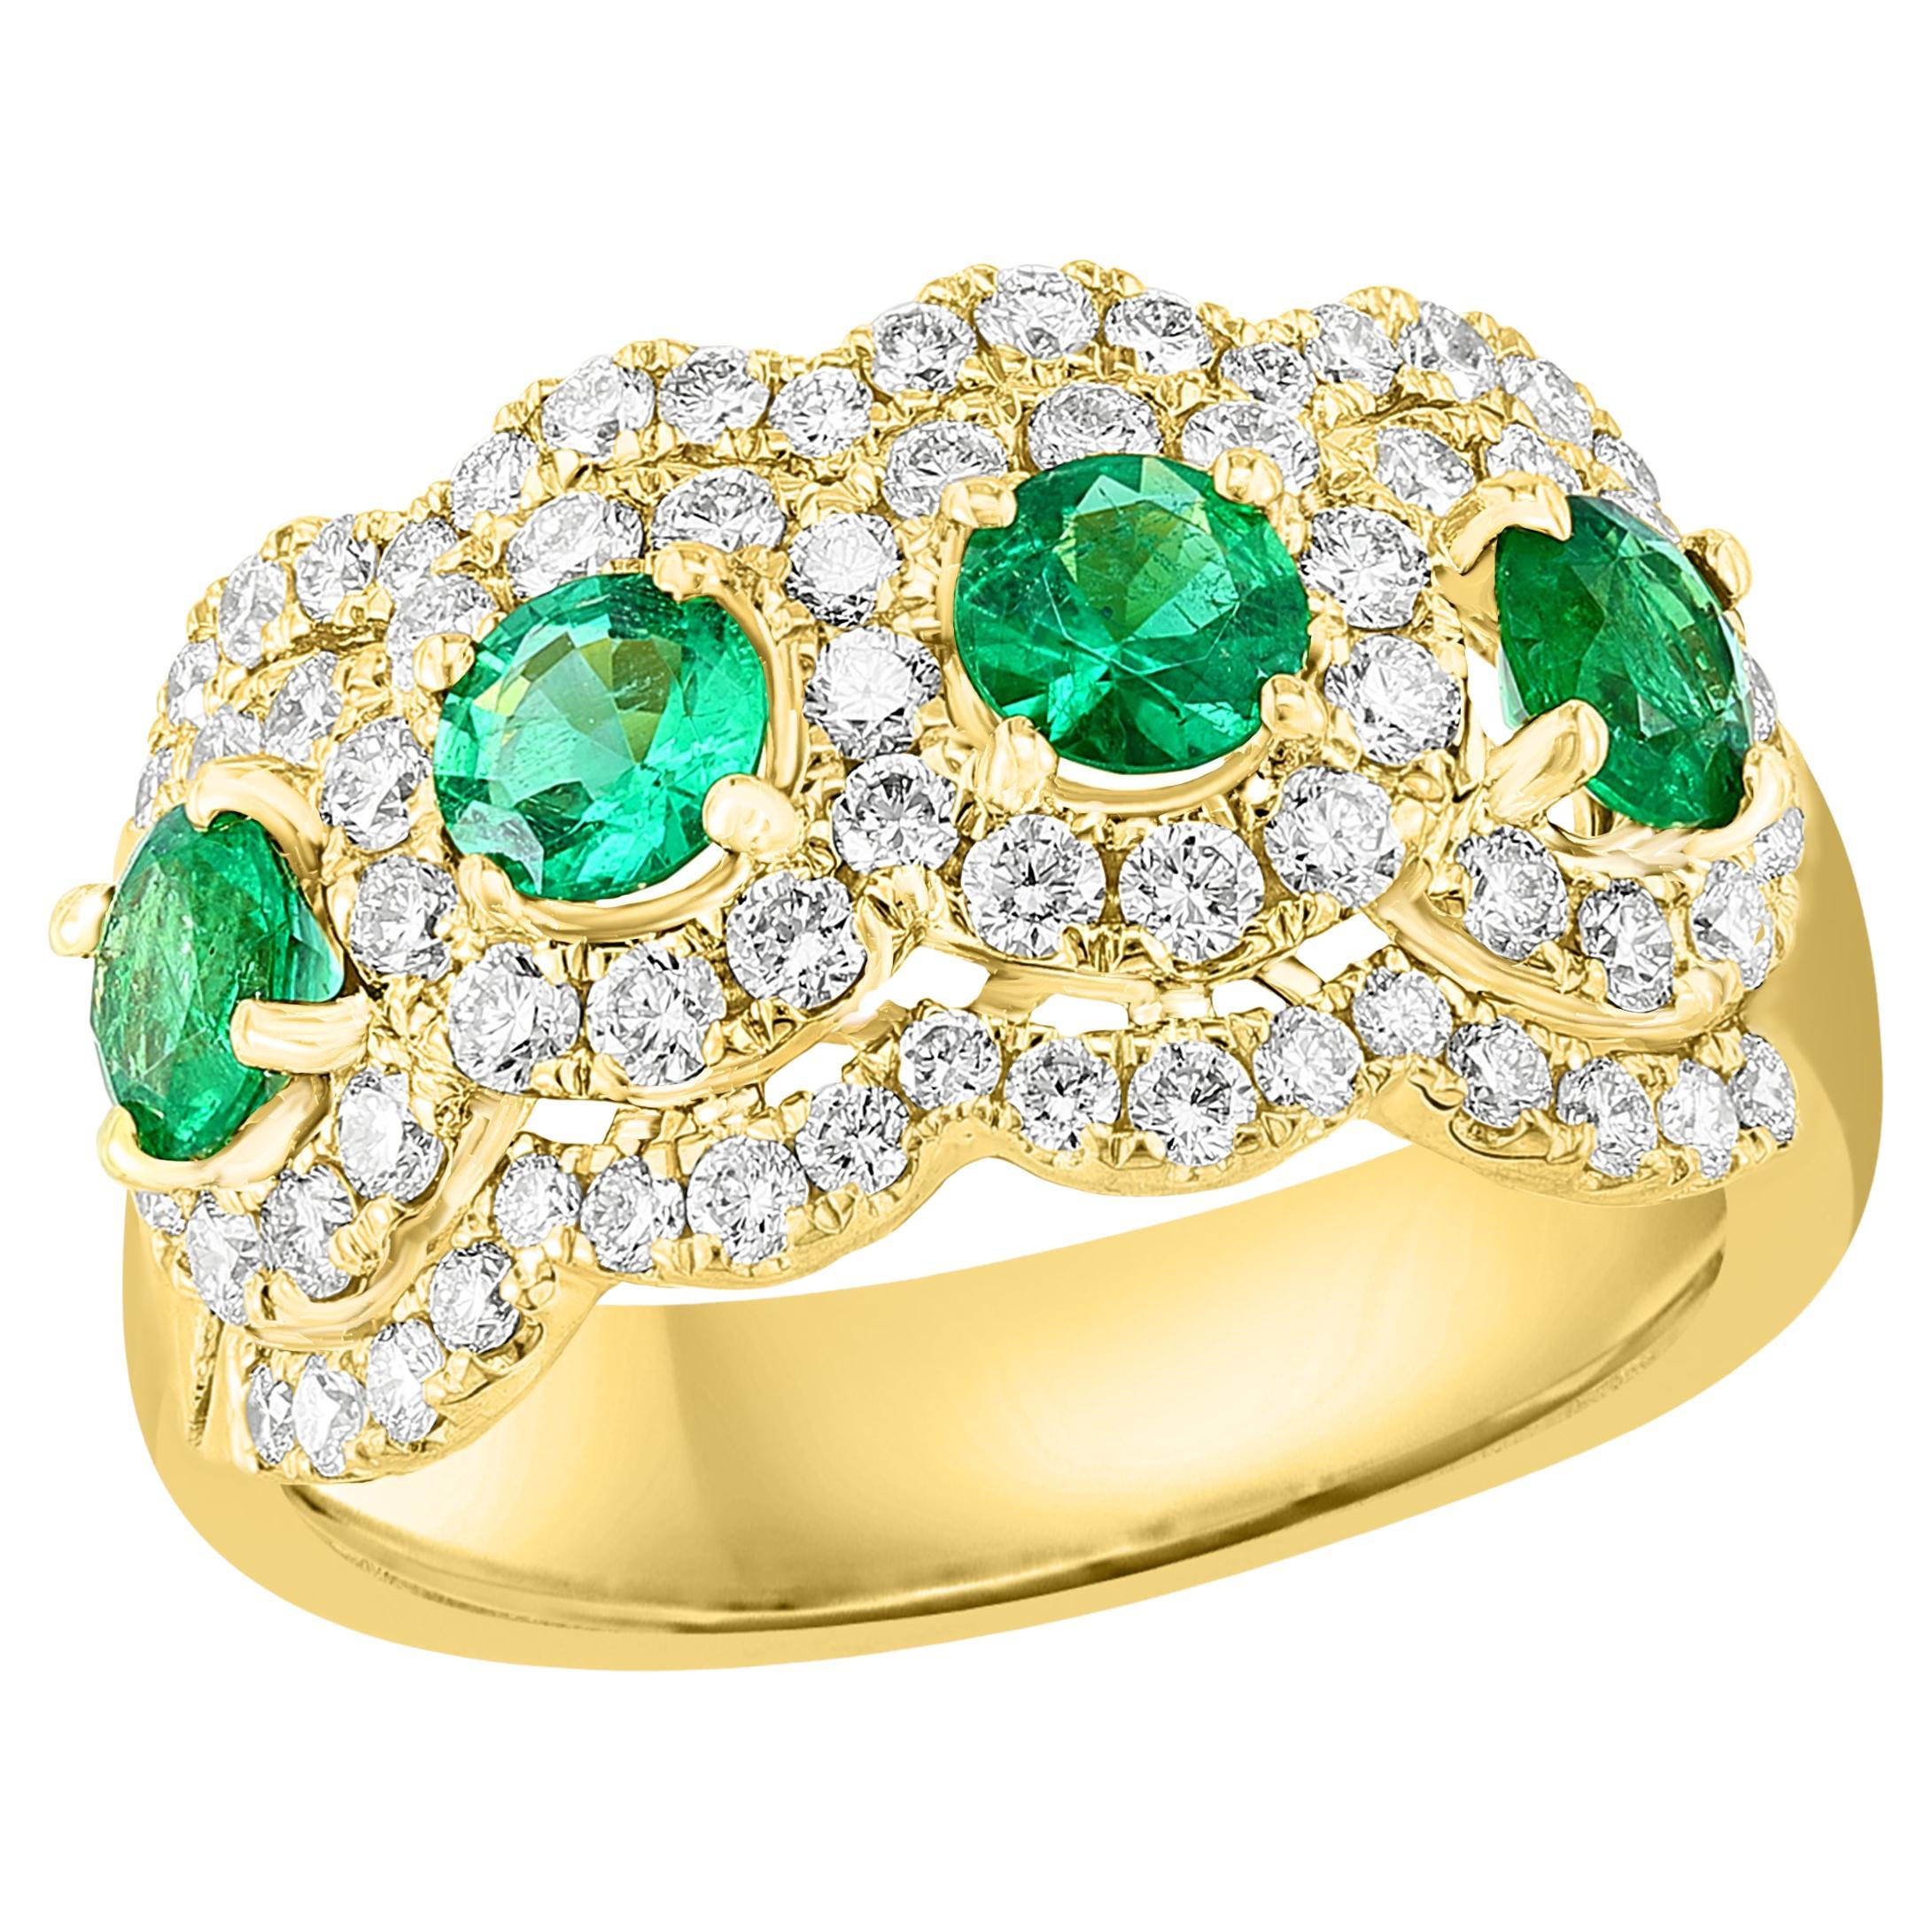 0.89 Carat Round Cut Emerald and Diamond 18K Yellow Gold Ring